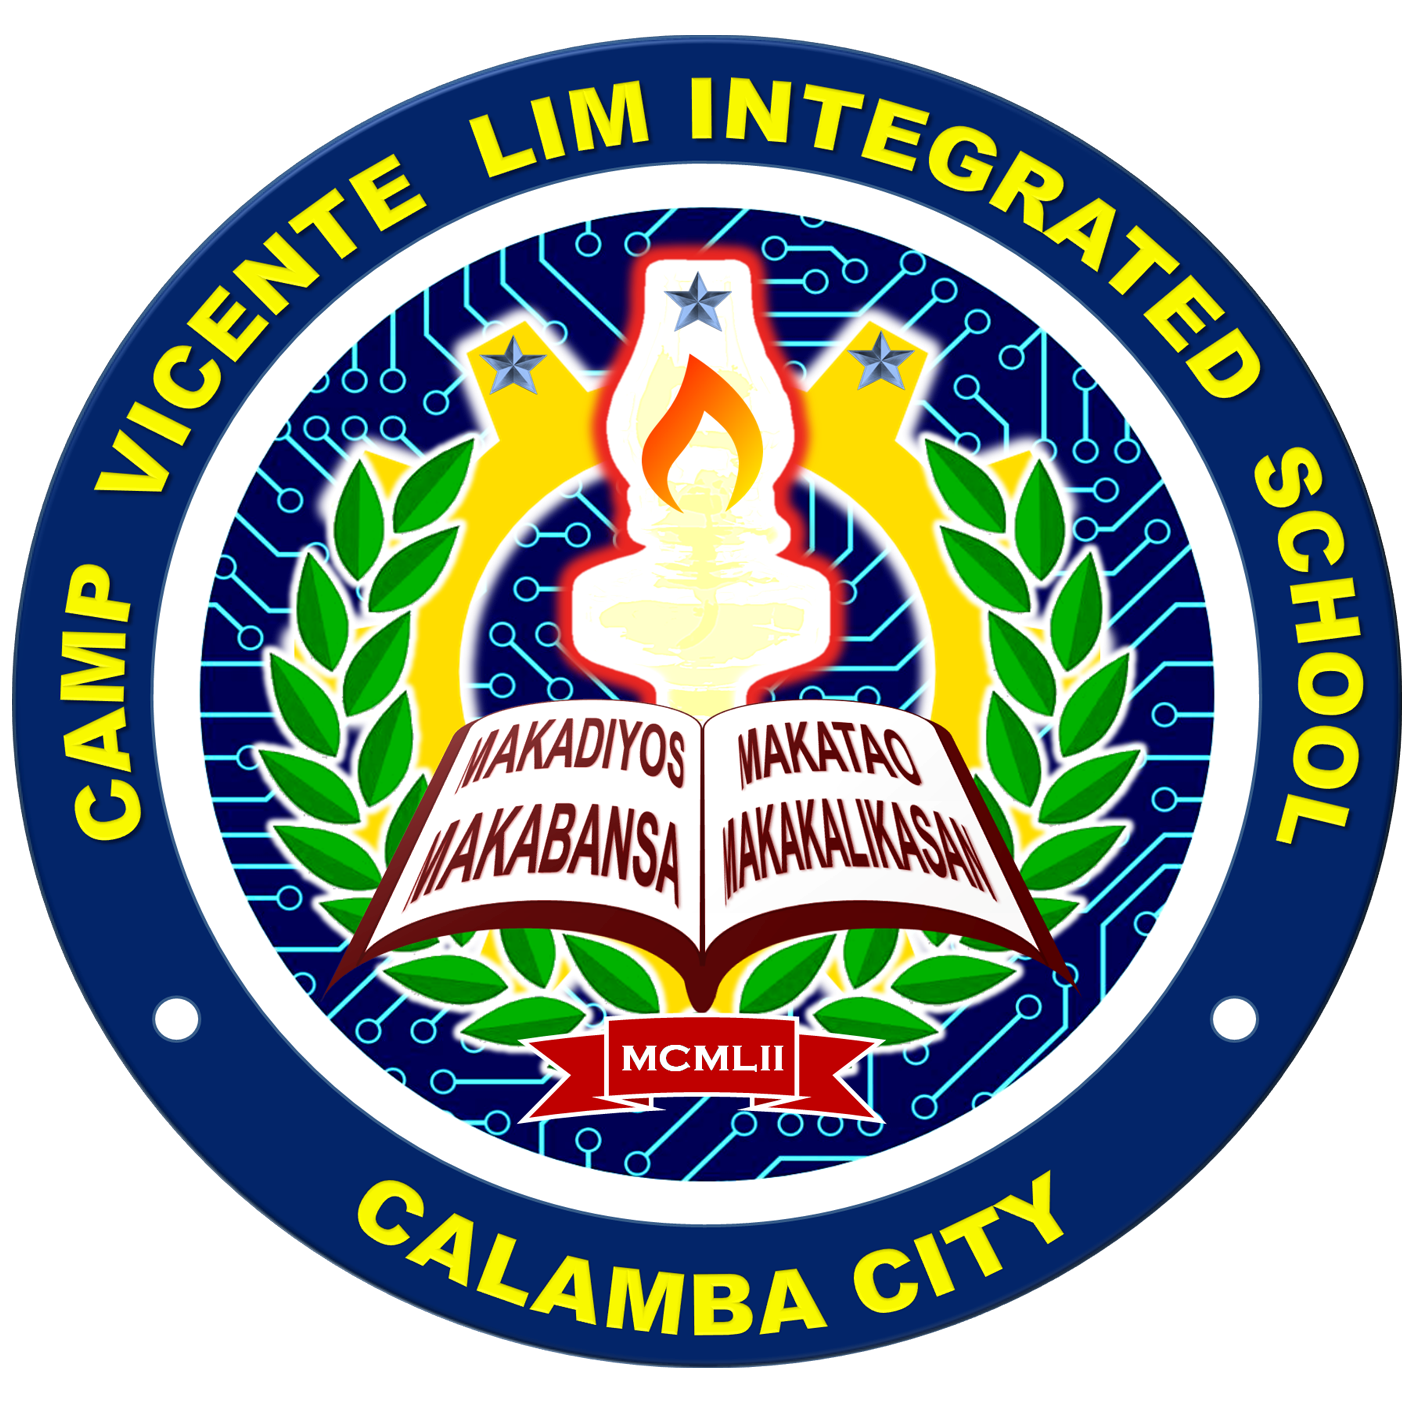 Camp Vicente Lim Integrated School